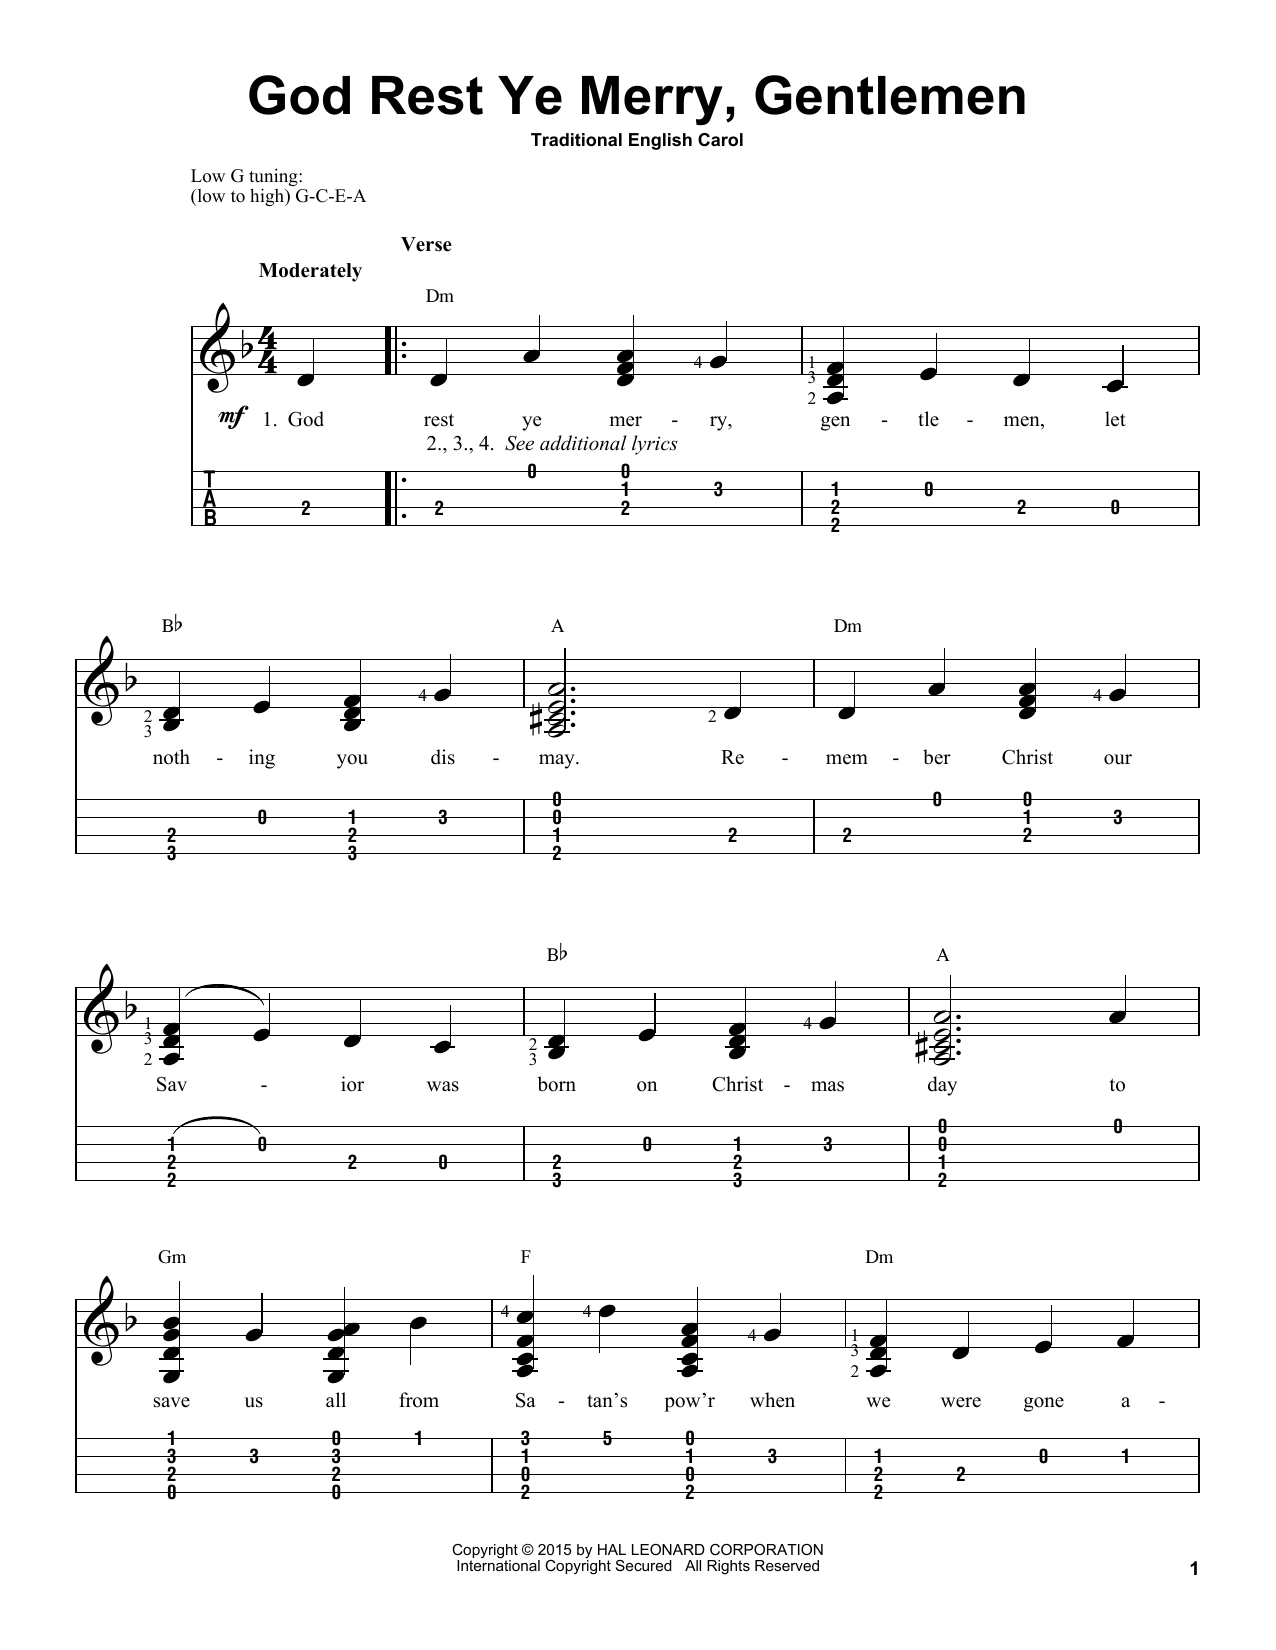 Download 19th Century English Carol God Rest Ye Merry, Gentlemen Sheet Music